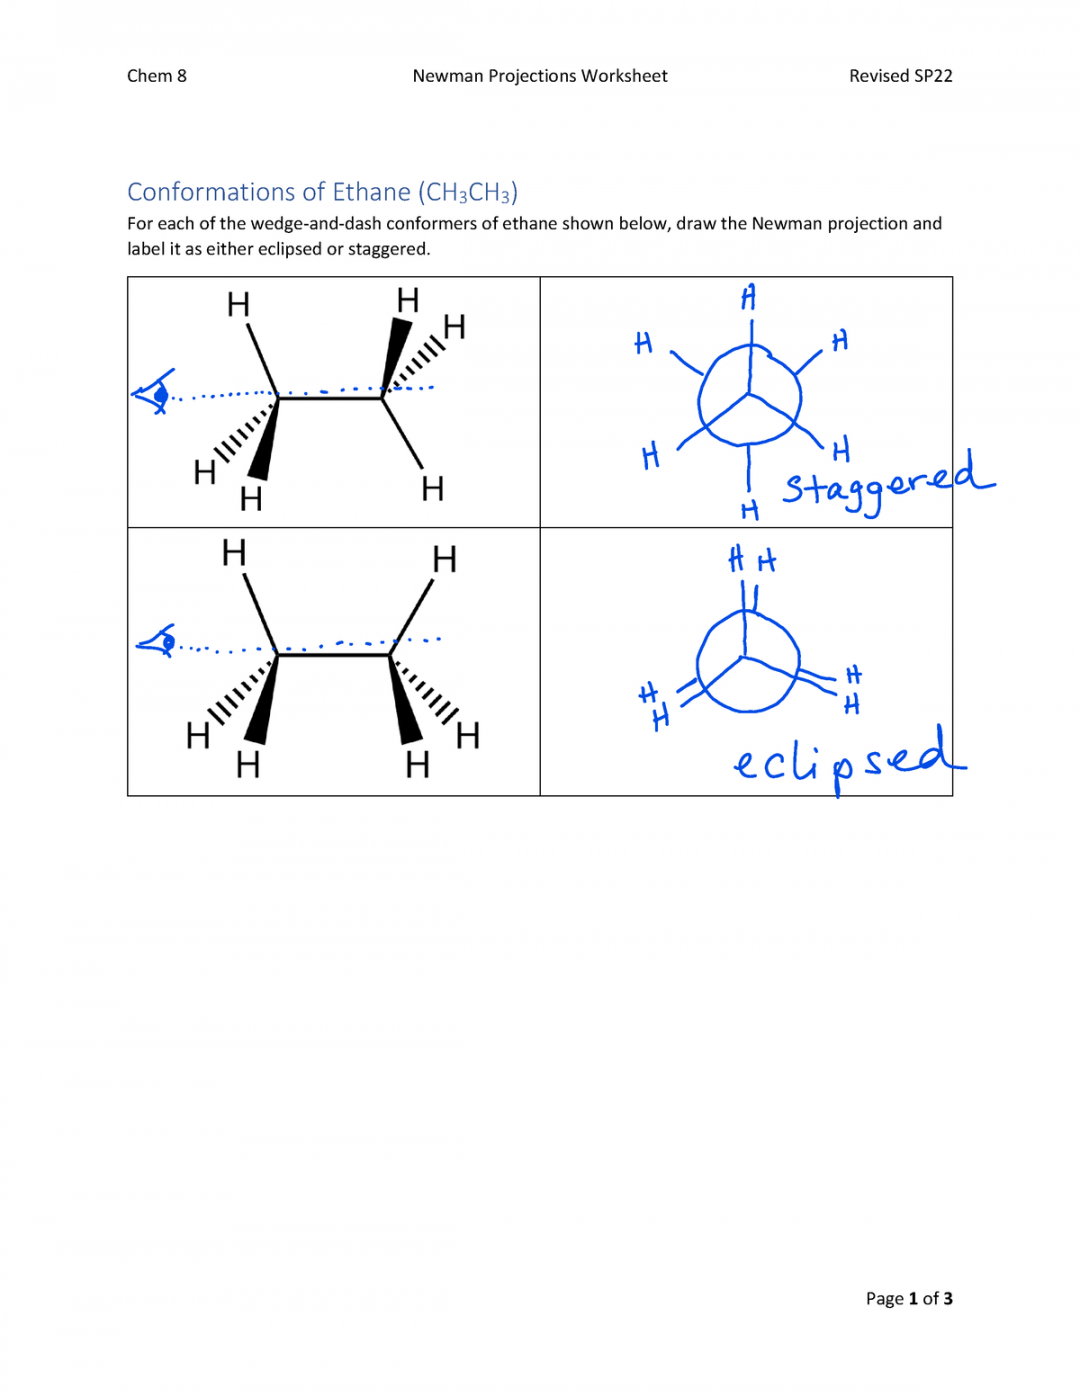 Newman Projections Worksheet - Solutions, pdf - CHEM B - Chem